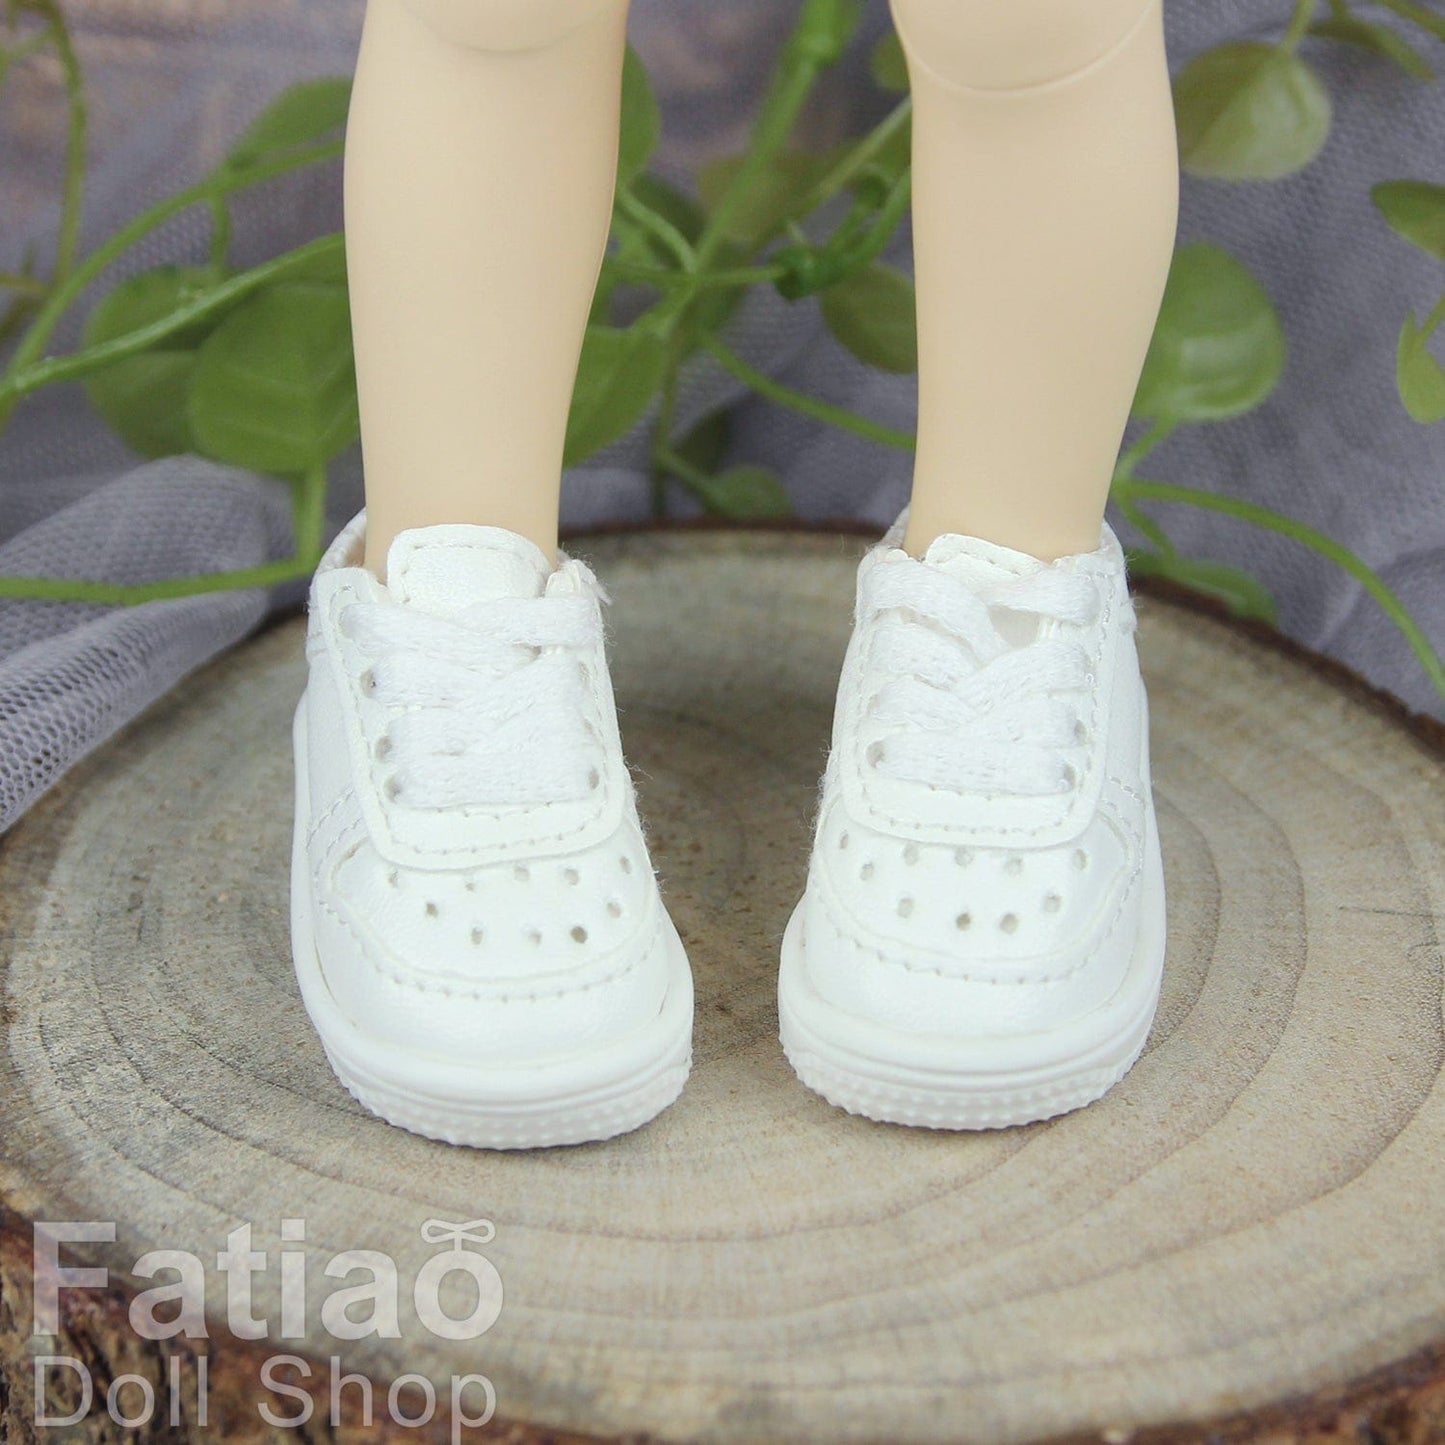 【Fatiao Doll Shop】綁帶運動鞋 多色 / BJD 6分 YoSD iMda 3.0